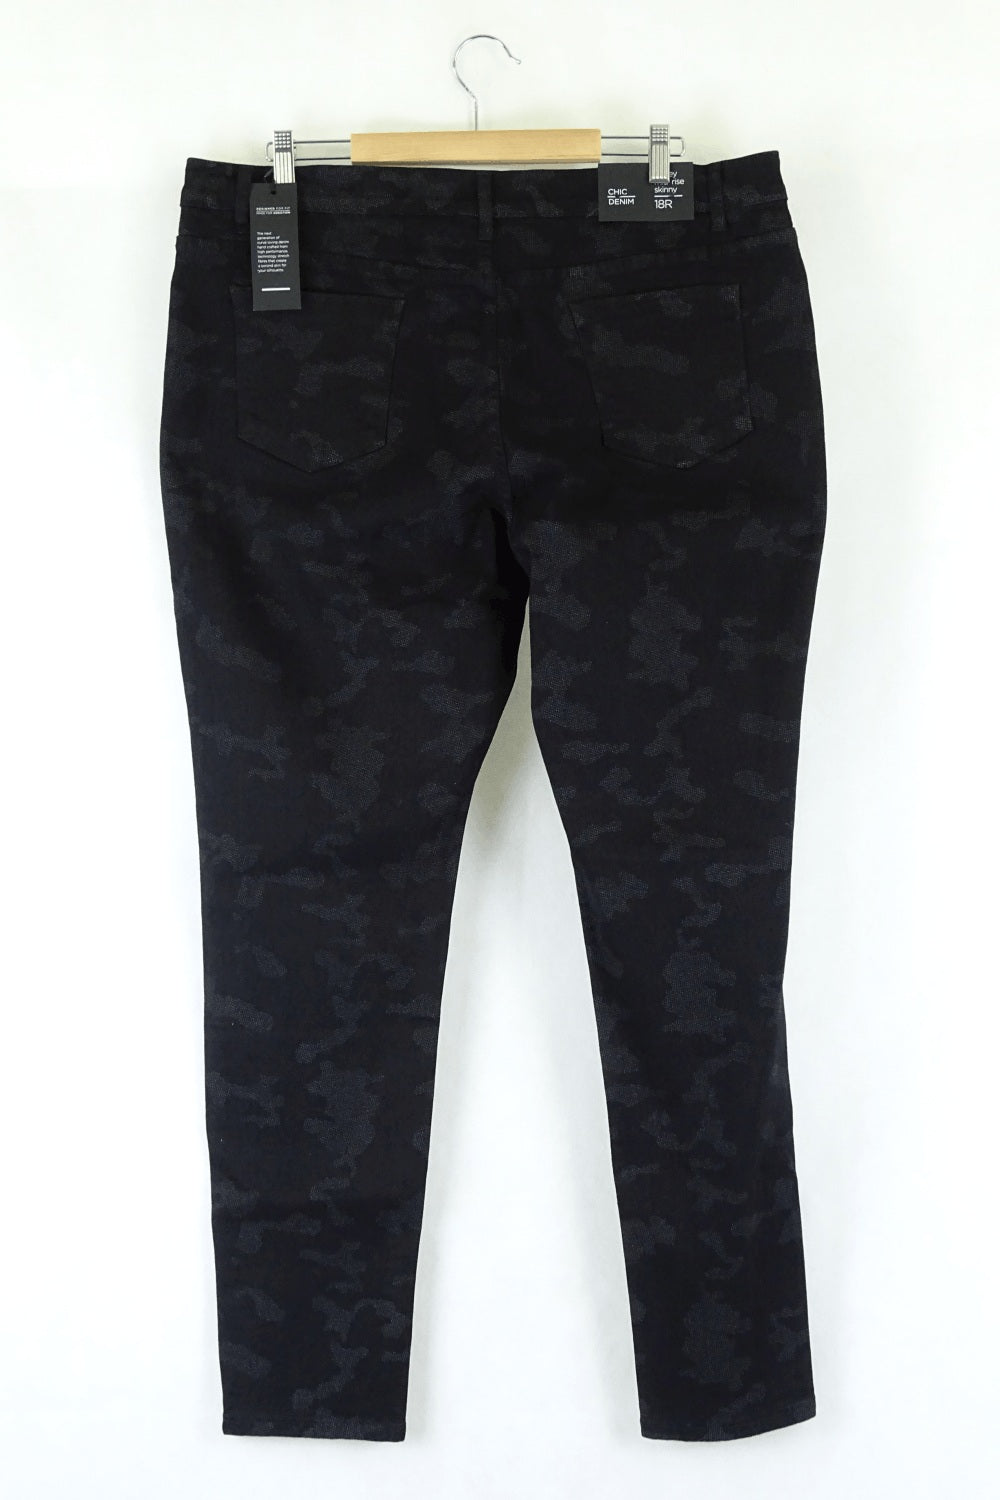 City Chic Black Camo Jeans 18R ( RRP $99.95)